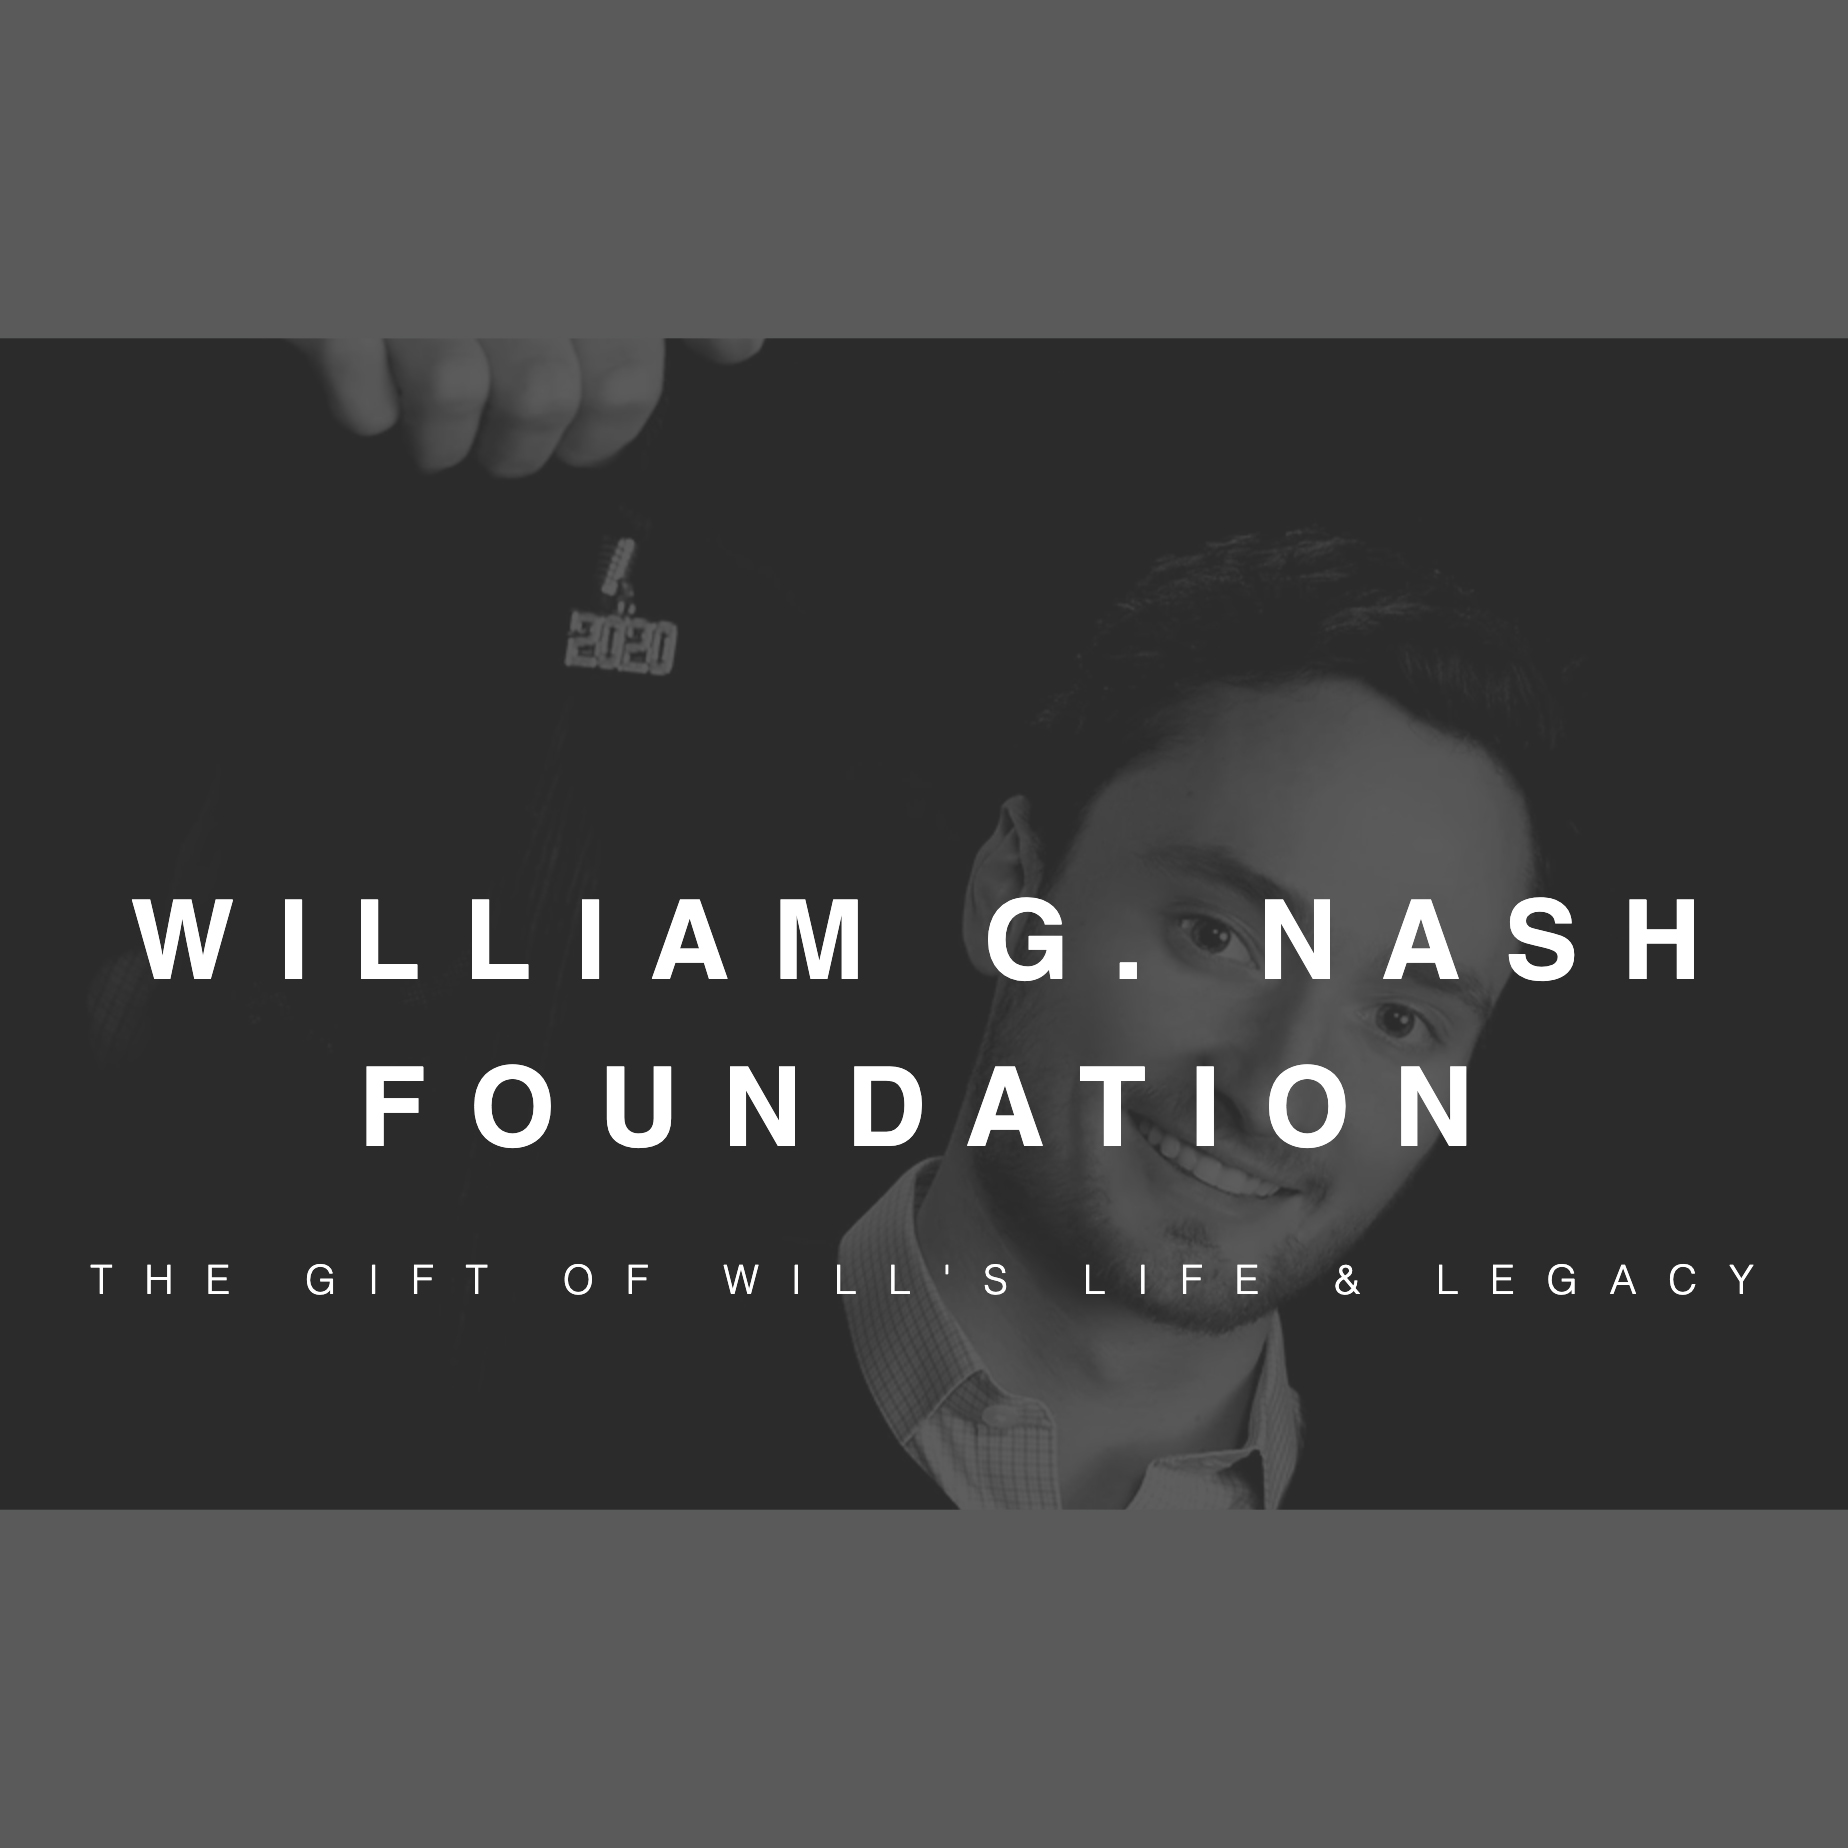 William G. Nash Foundation